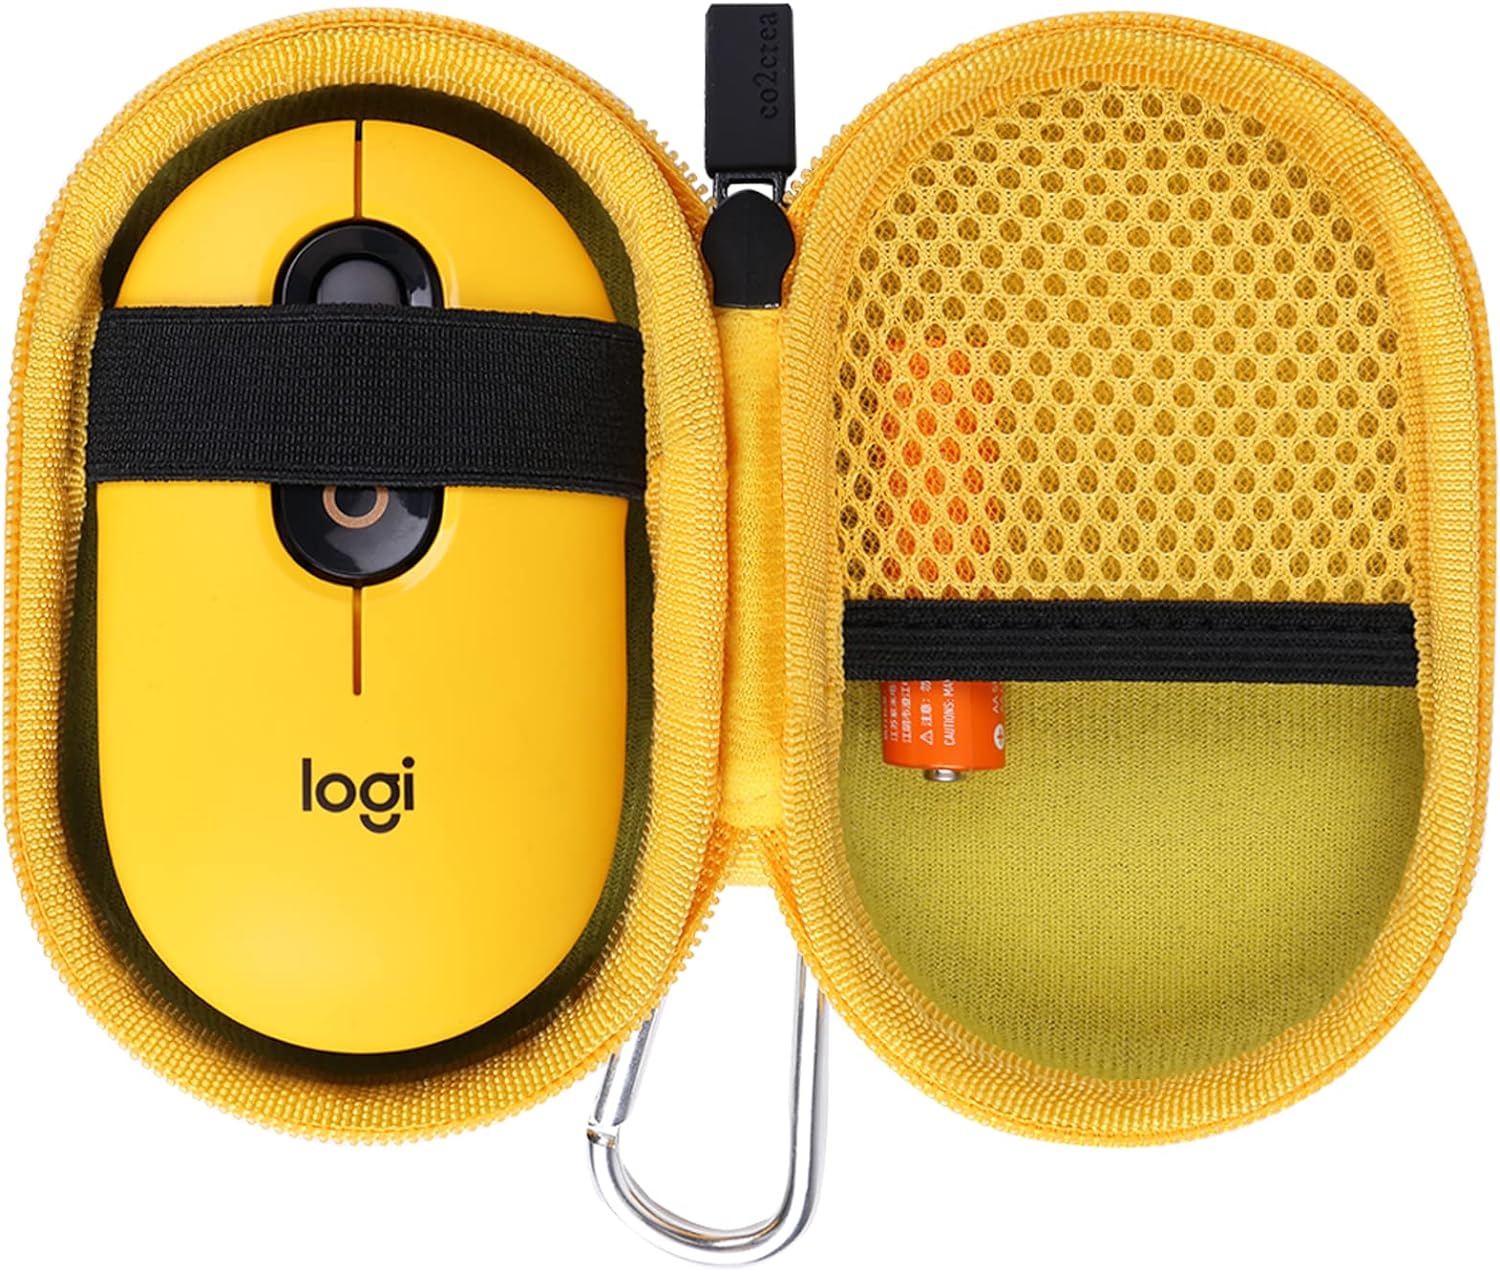 co2CREA Hard Case Replacement for Logitech POP Wireless Mouse, Black Case + Inside Blast Yellow